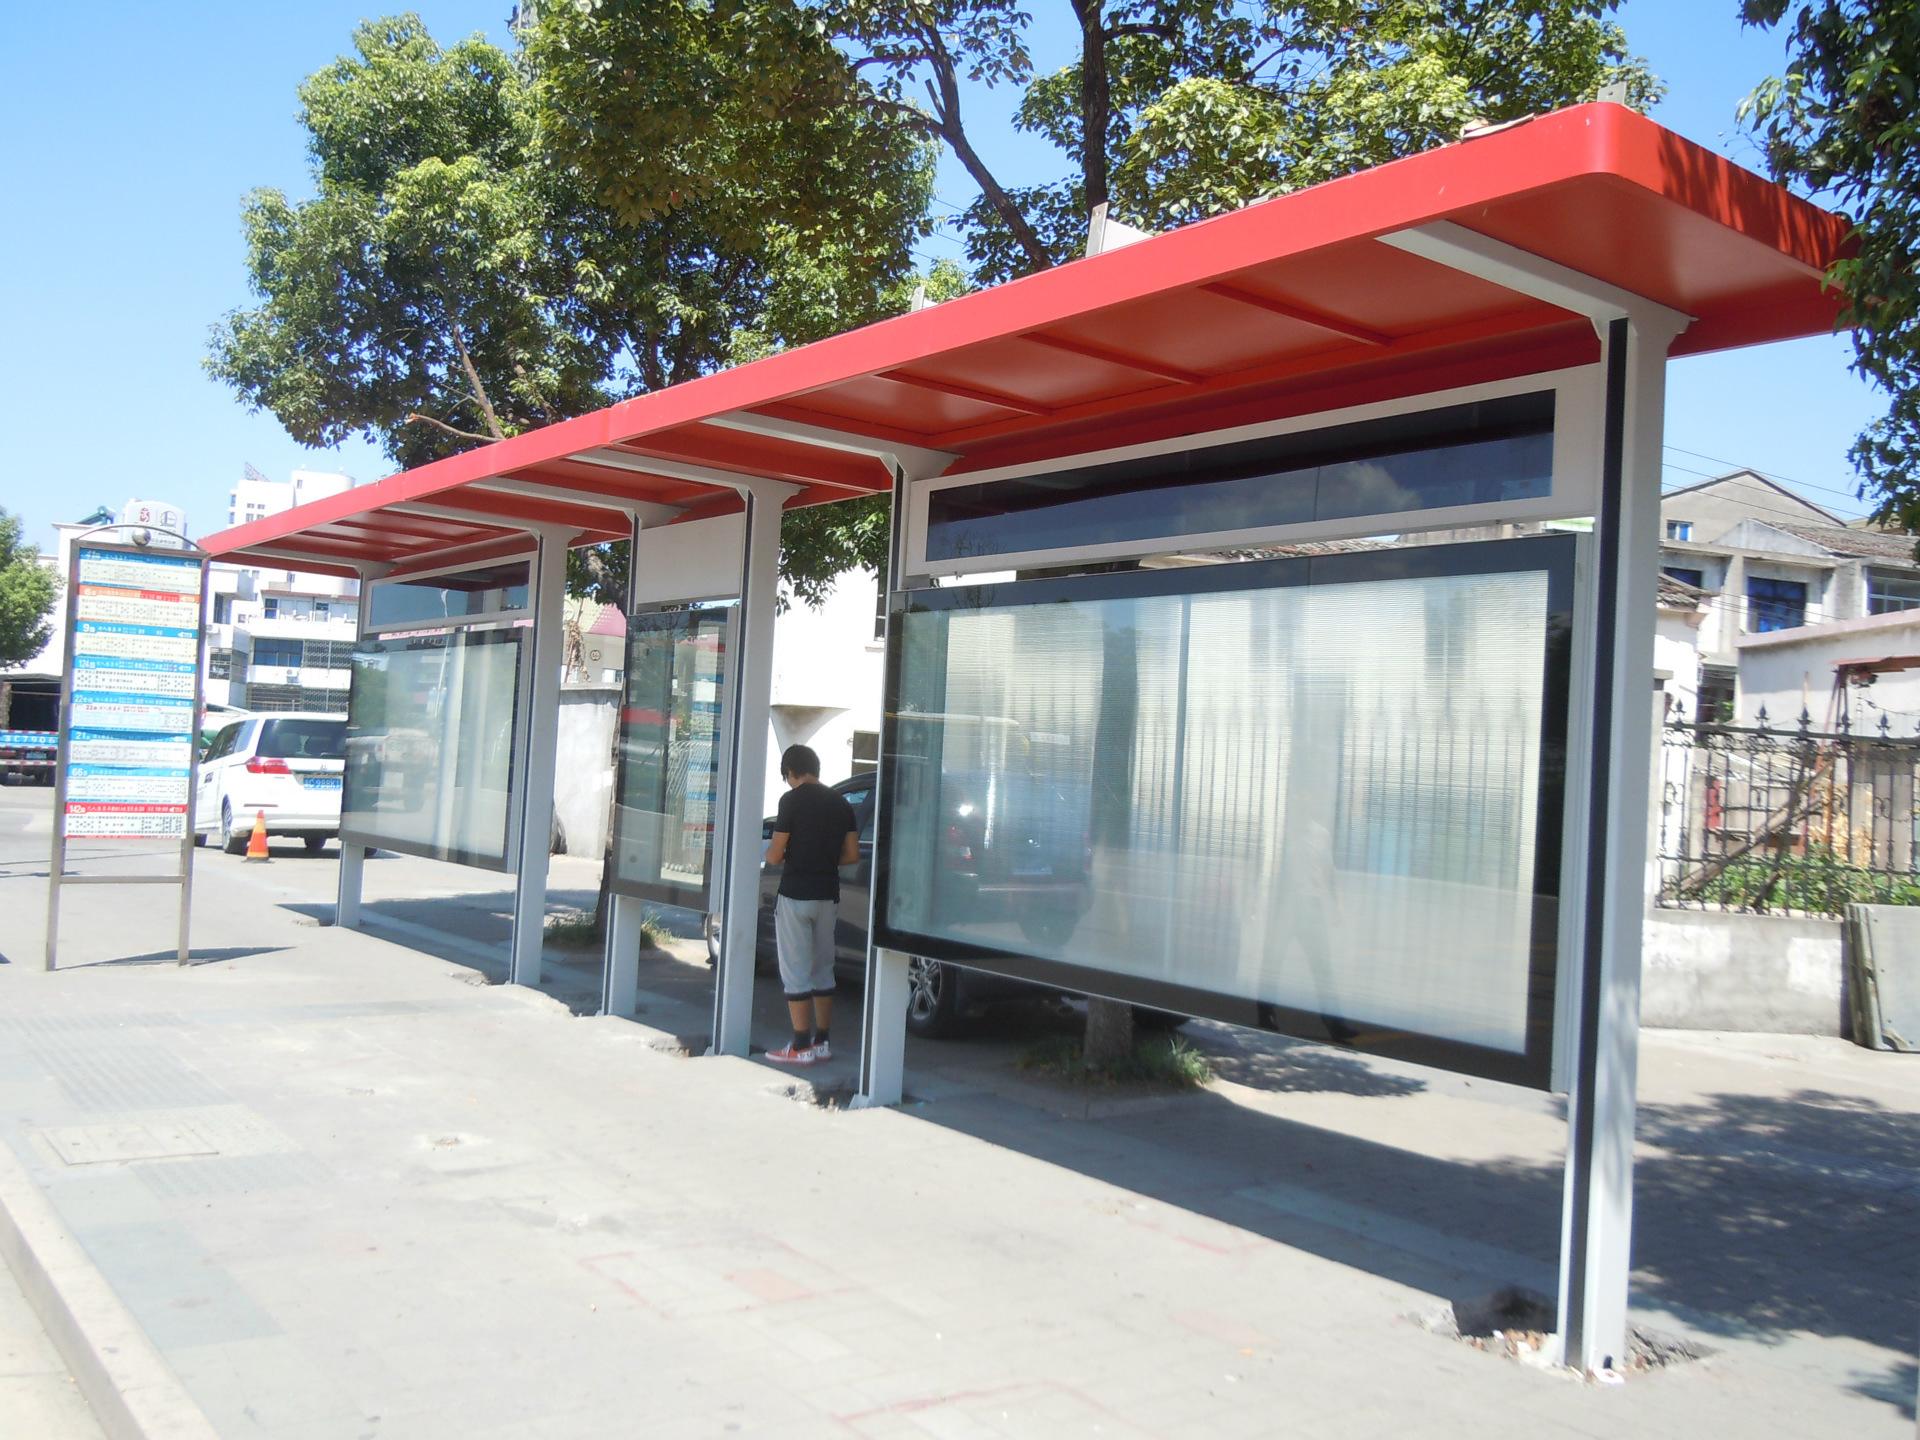 Bus shelter technology